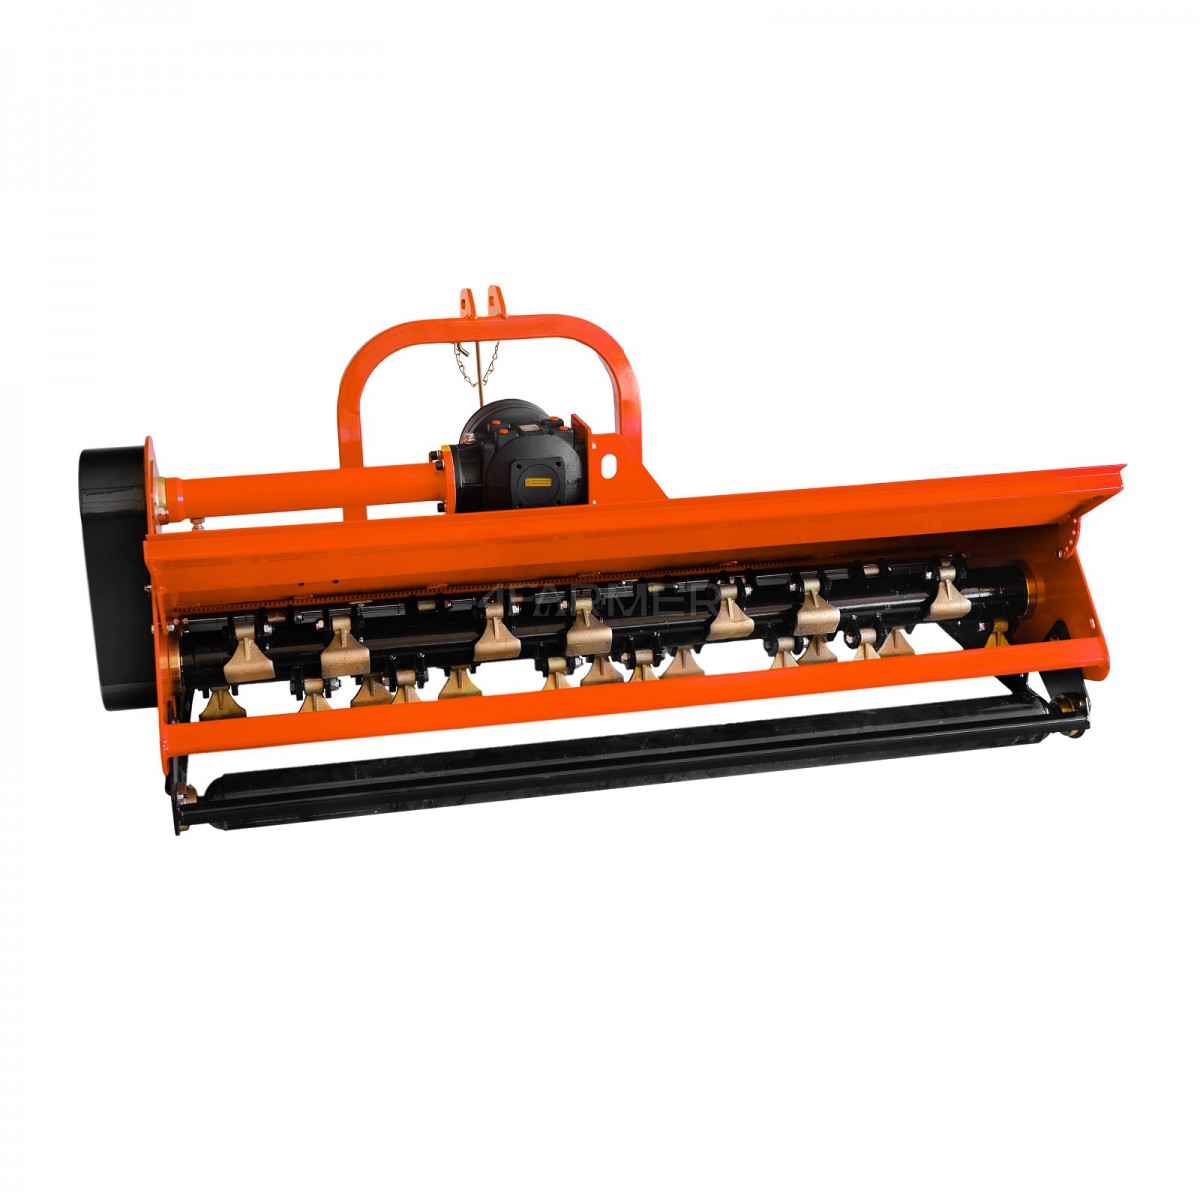 Flail mower EFGC-K 175, opening 4FARMER hatch - orange